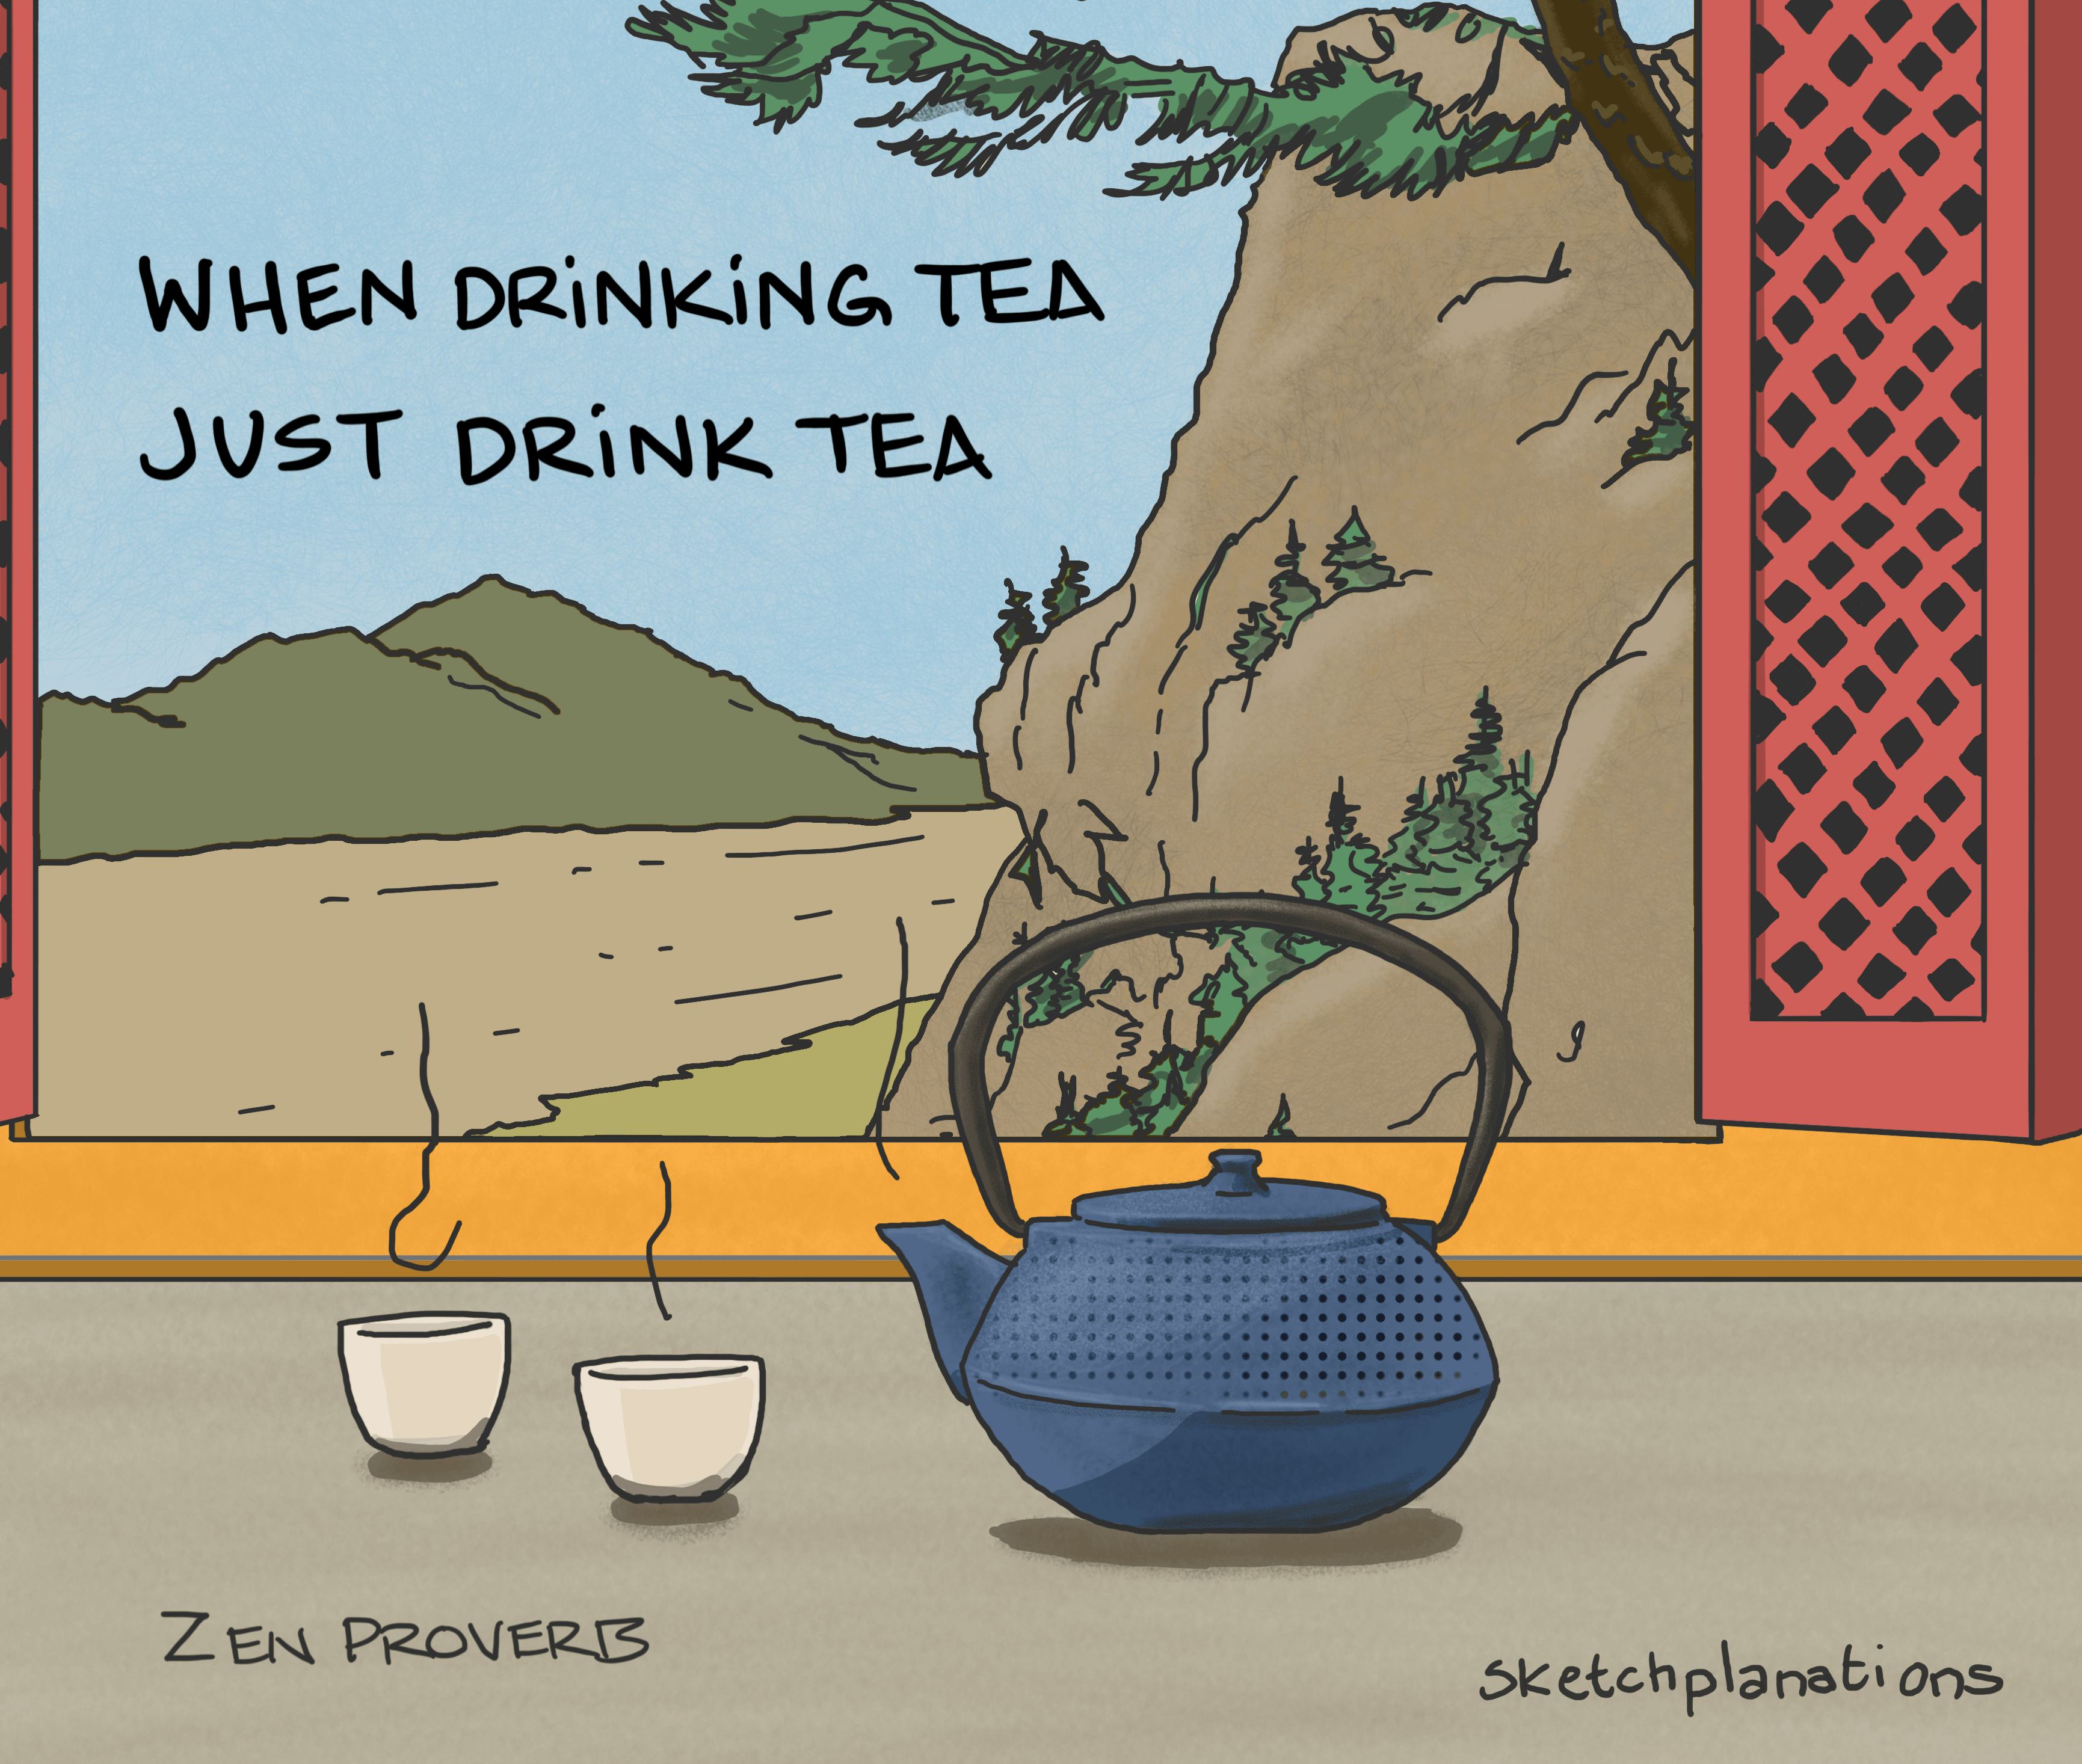 When drinking tea, just drink tea - Sketchplanations